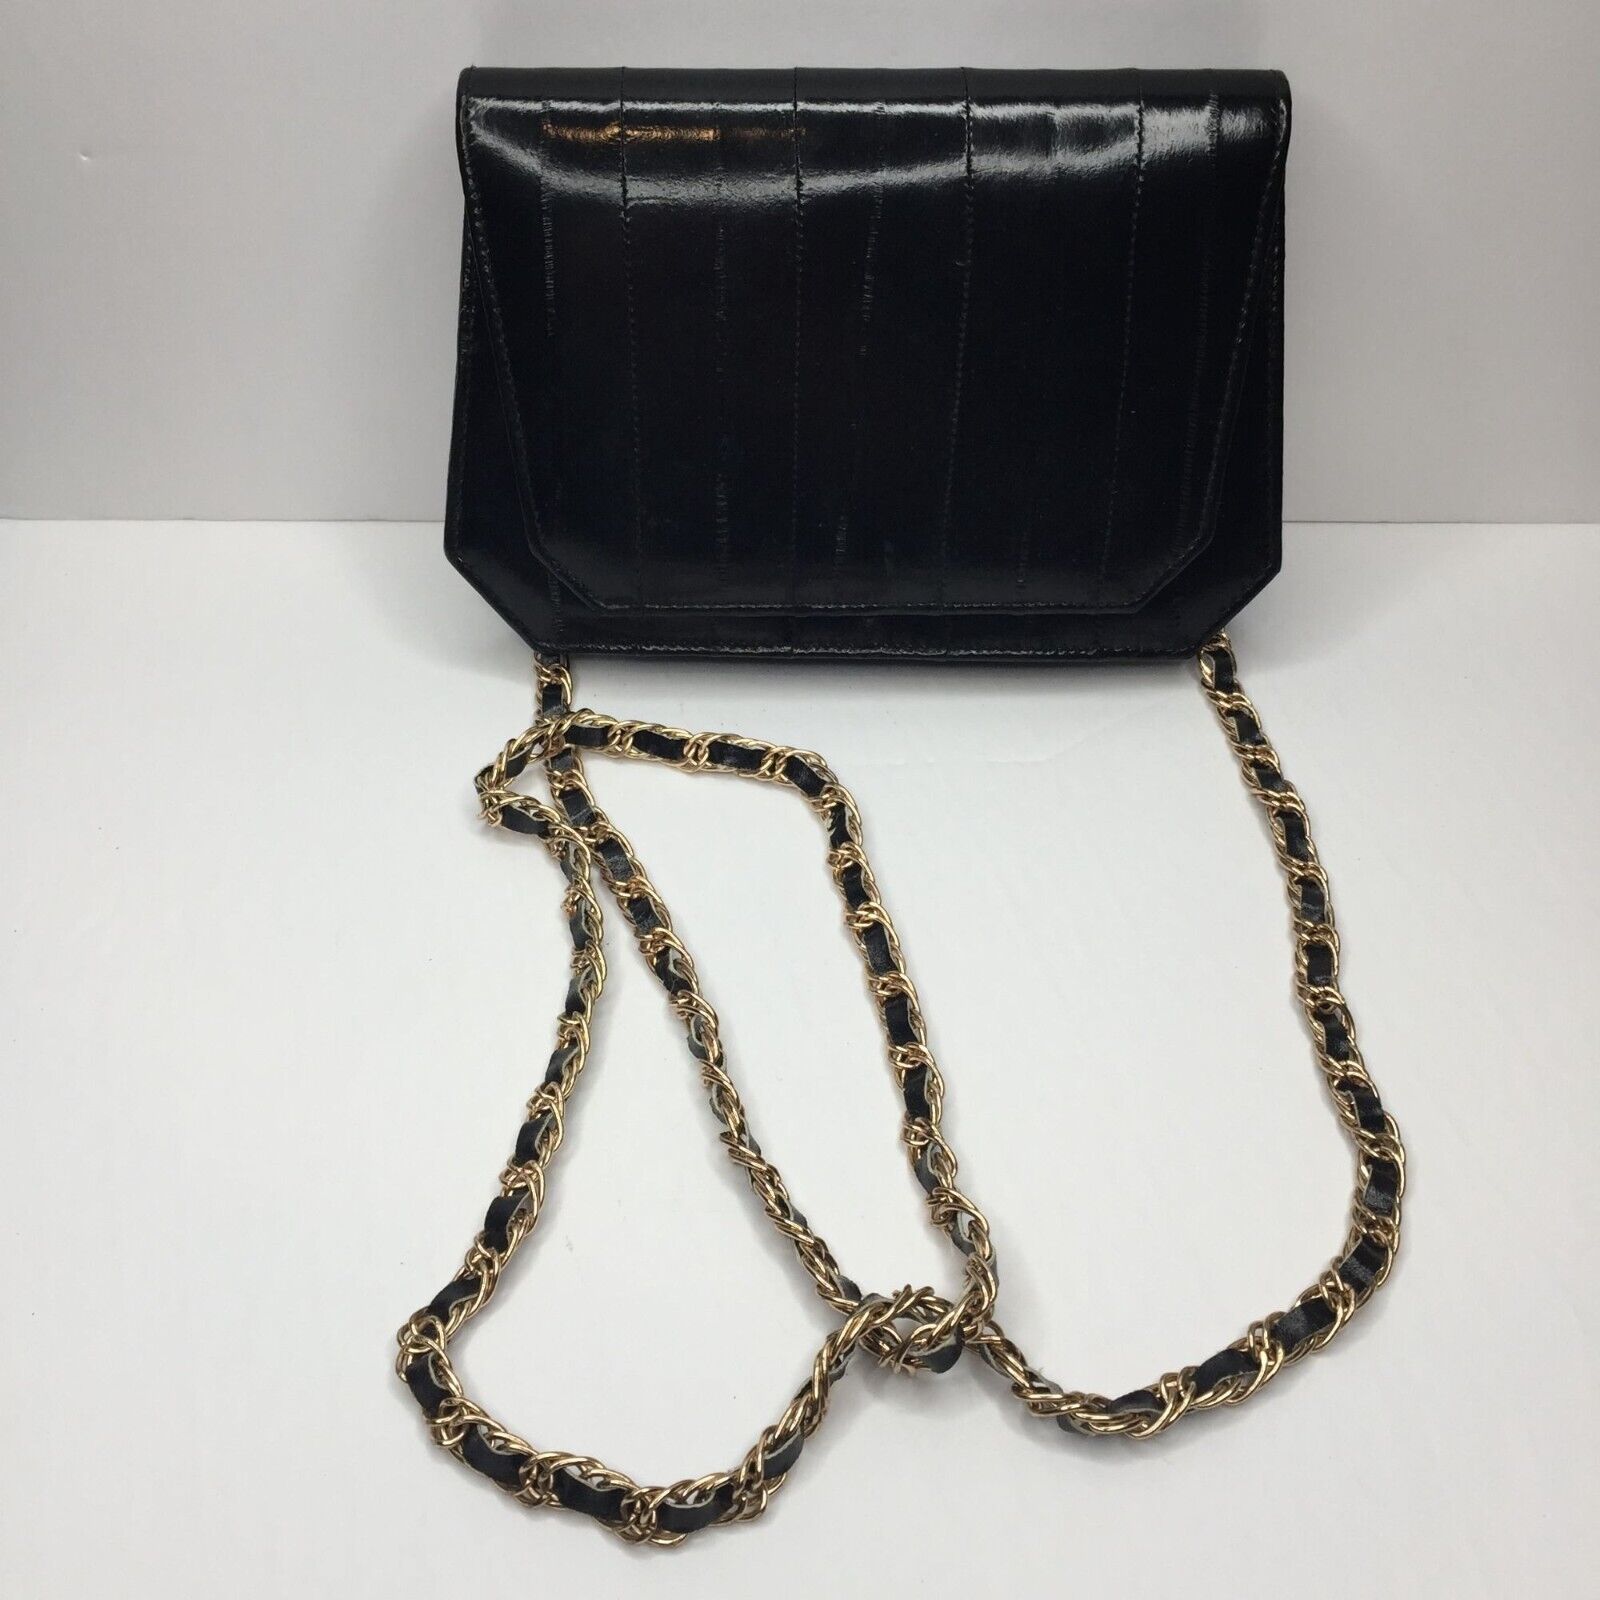 Primary image for Vintage Genuine Eel Skin Leather Black Evening Purse Handbag Mirror Chain Strap